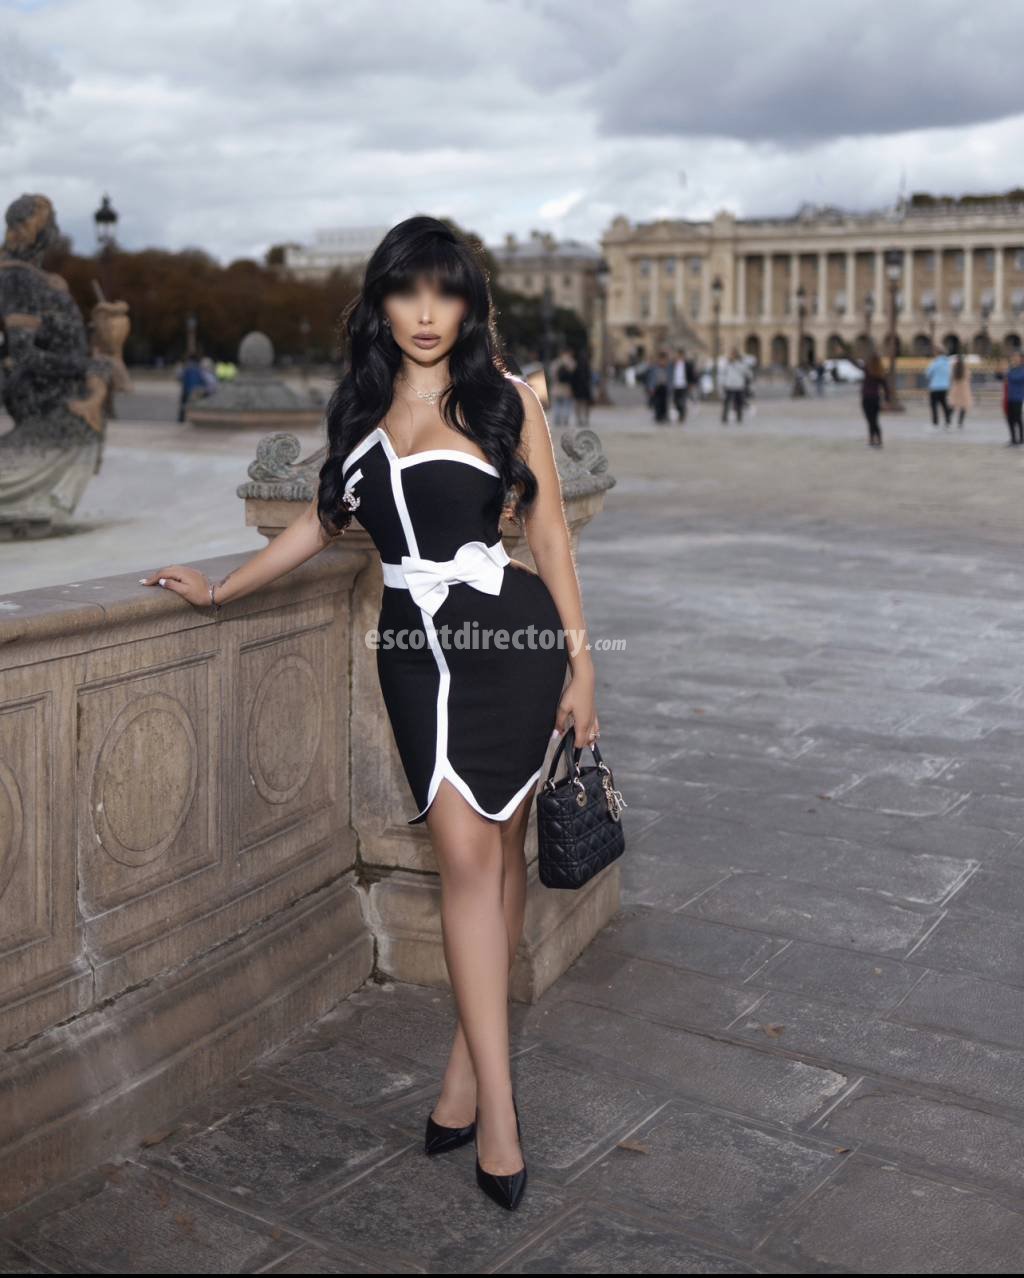 Ayah-Bella Vip Escort escort in Paris offers kissing services